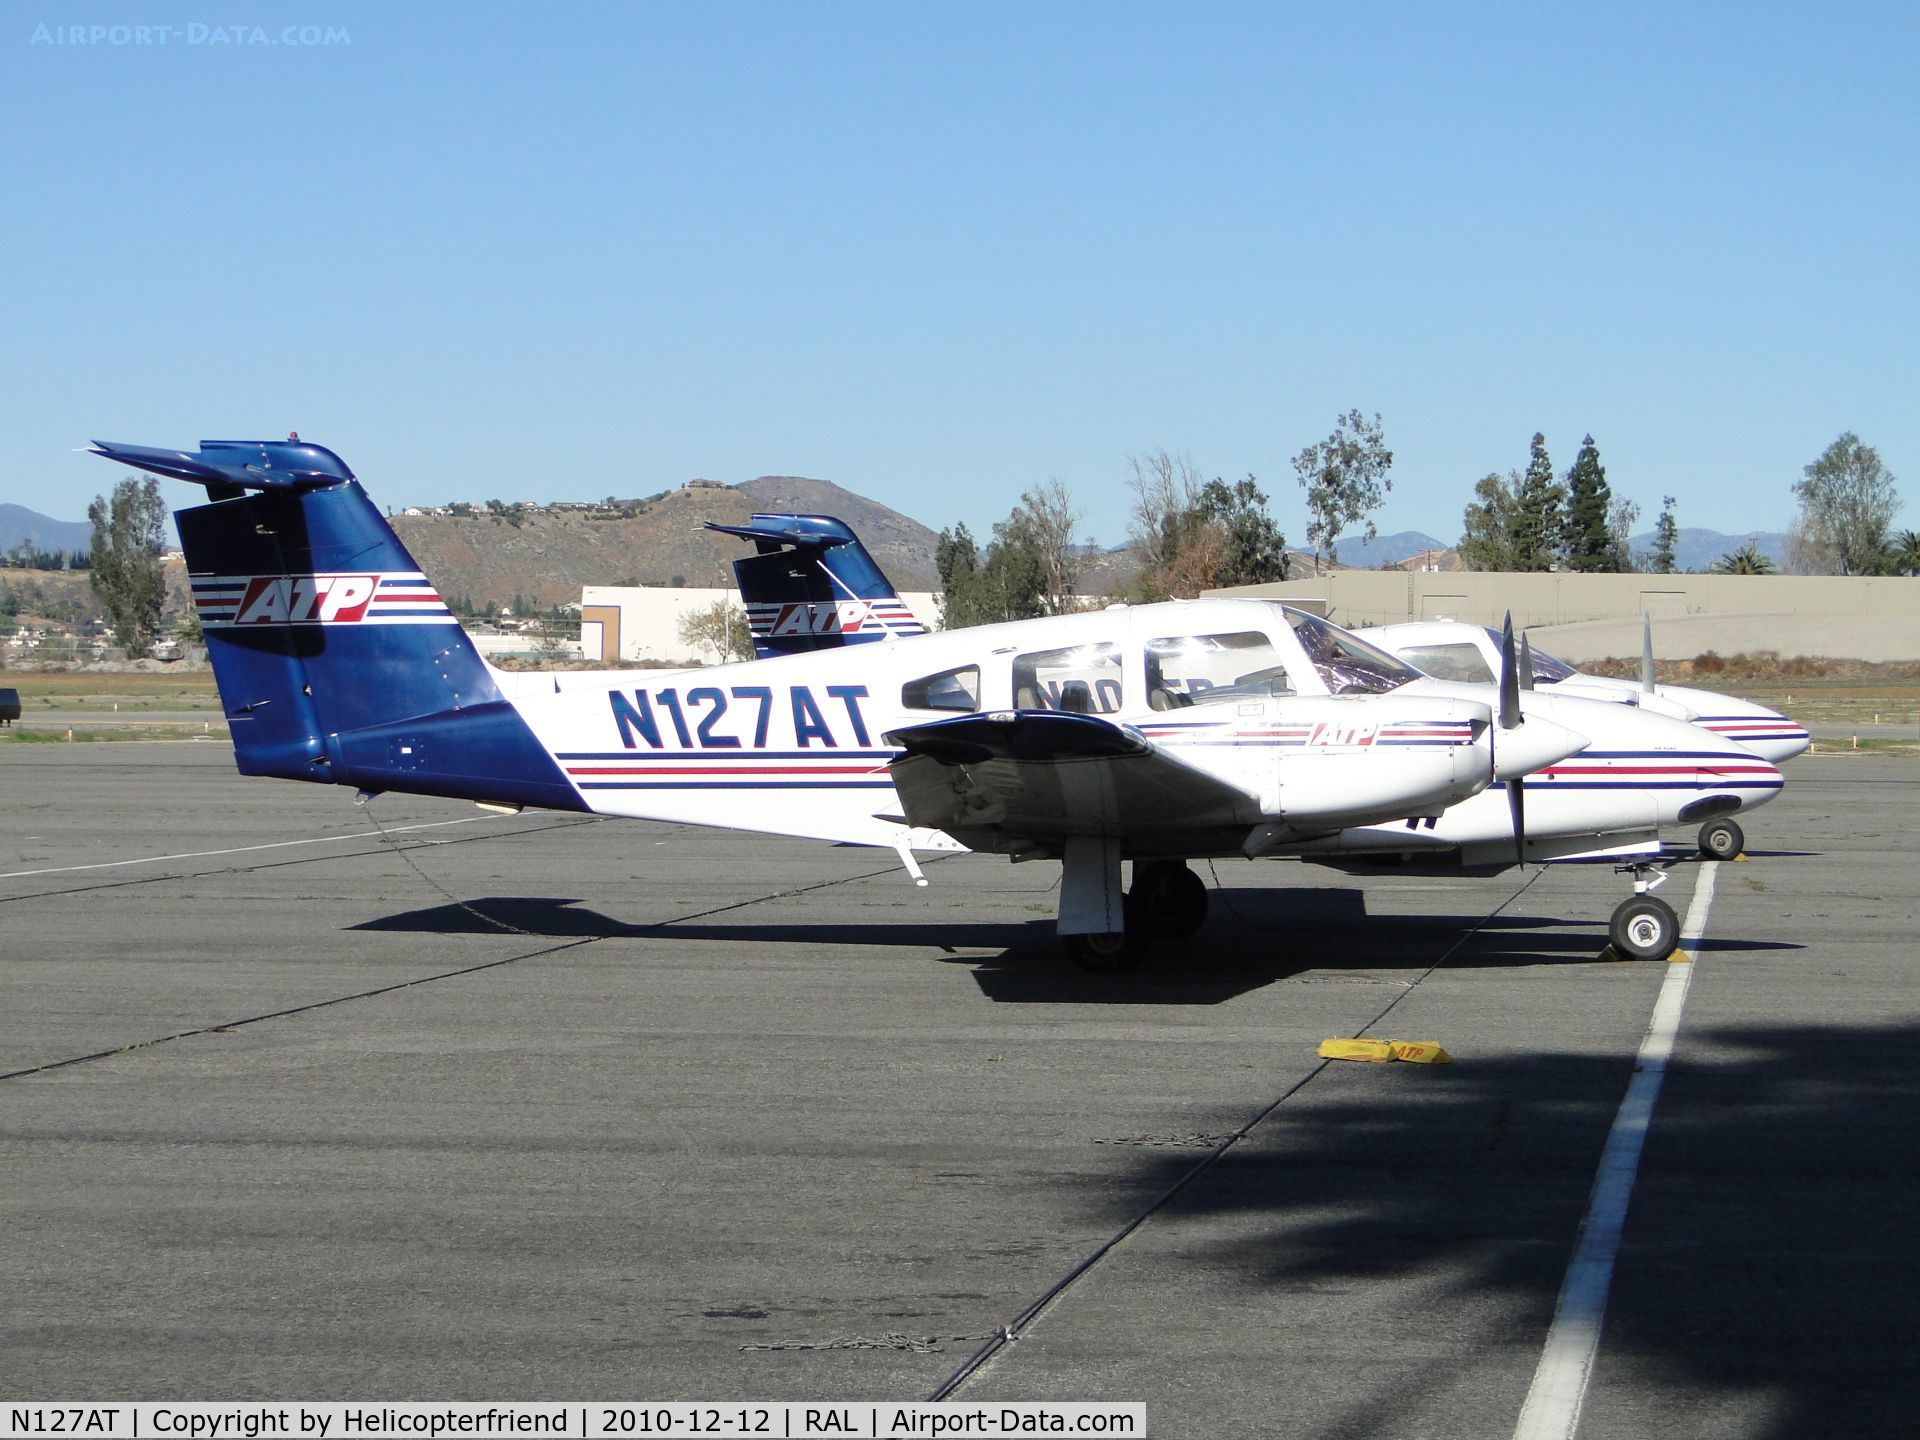 N127AT, 2000 Piper PA-44-180 Seminole C/N 4496035, Parked near Admin building